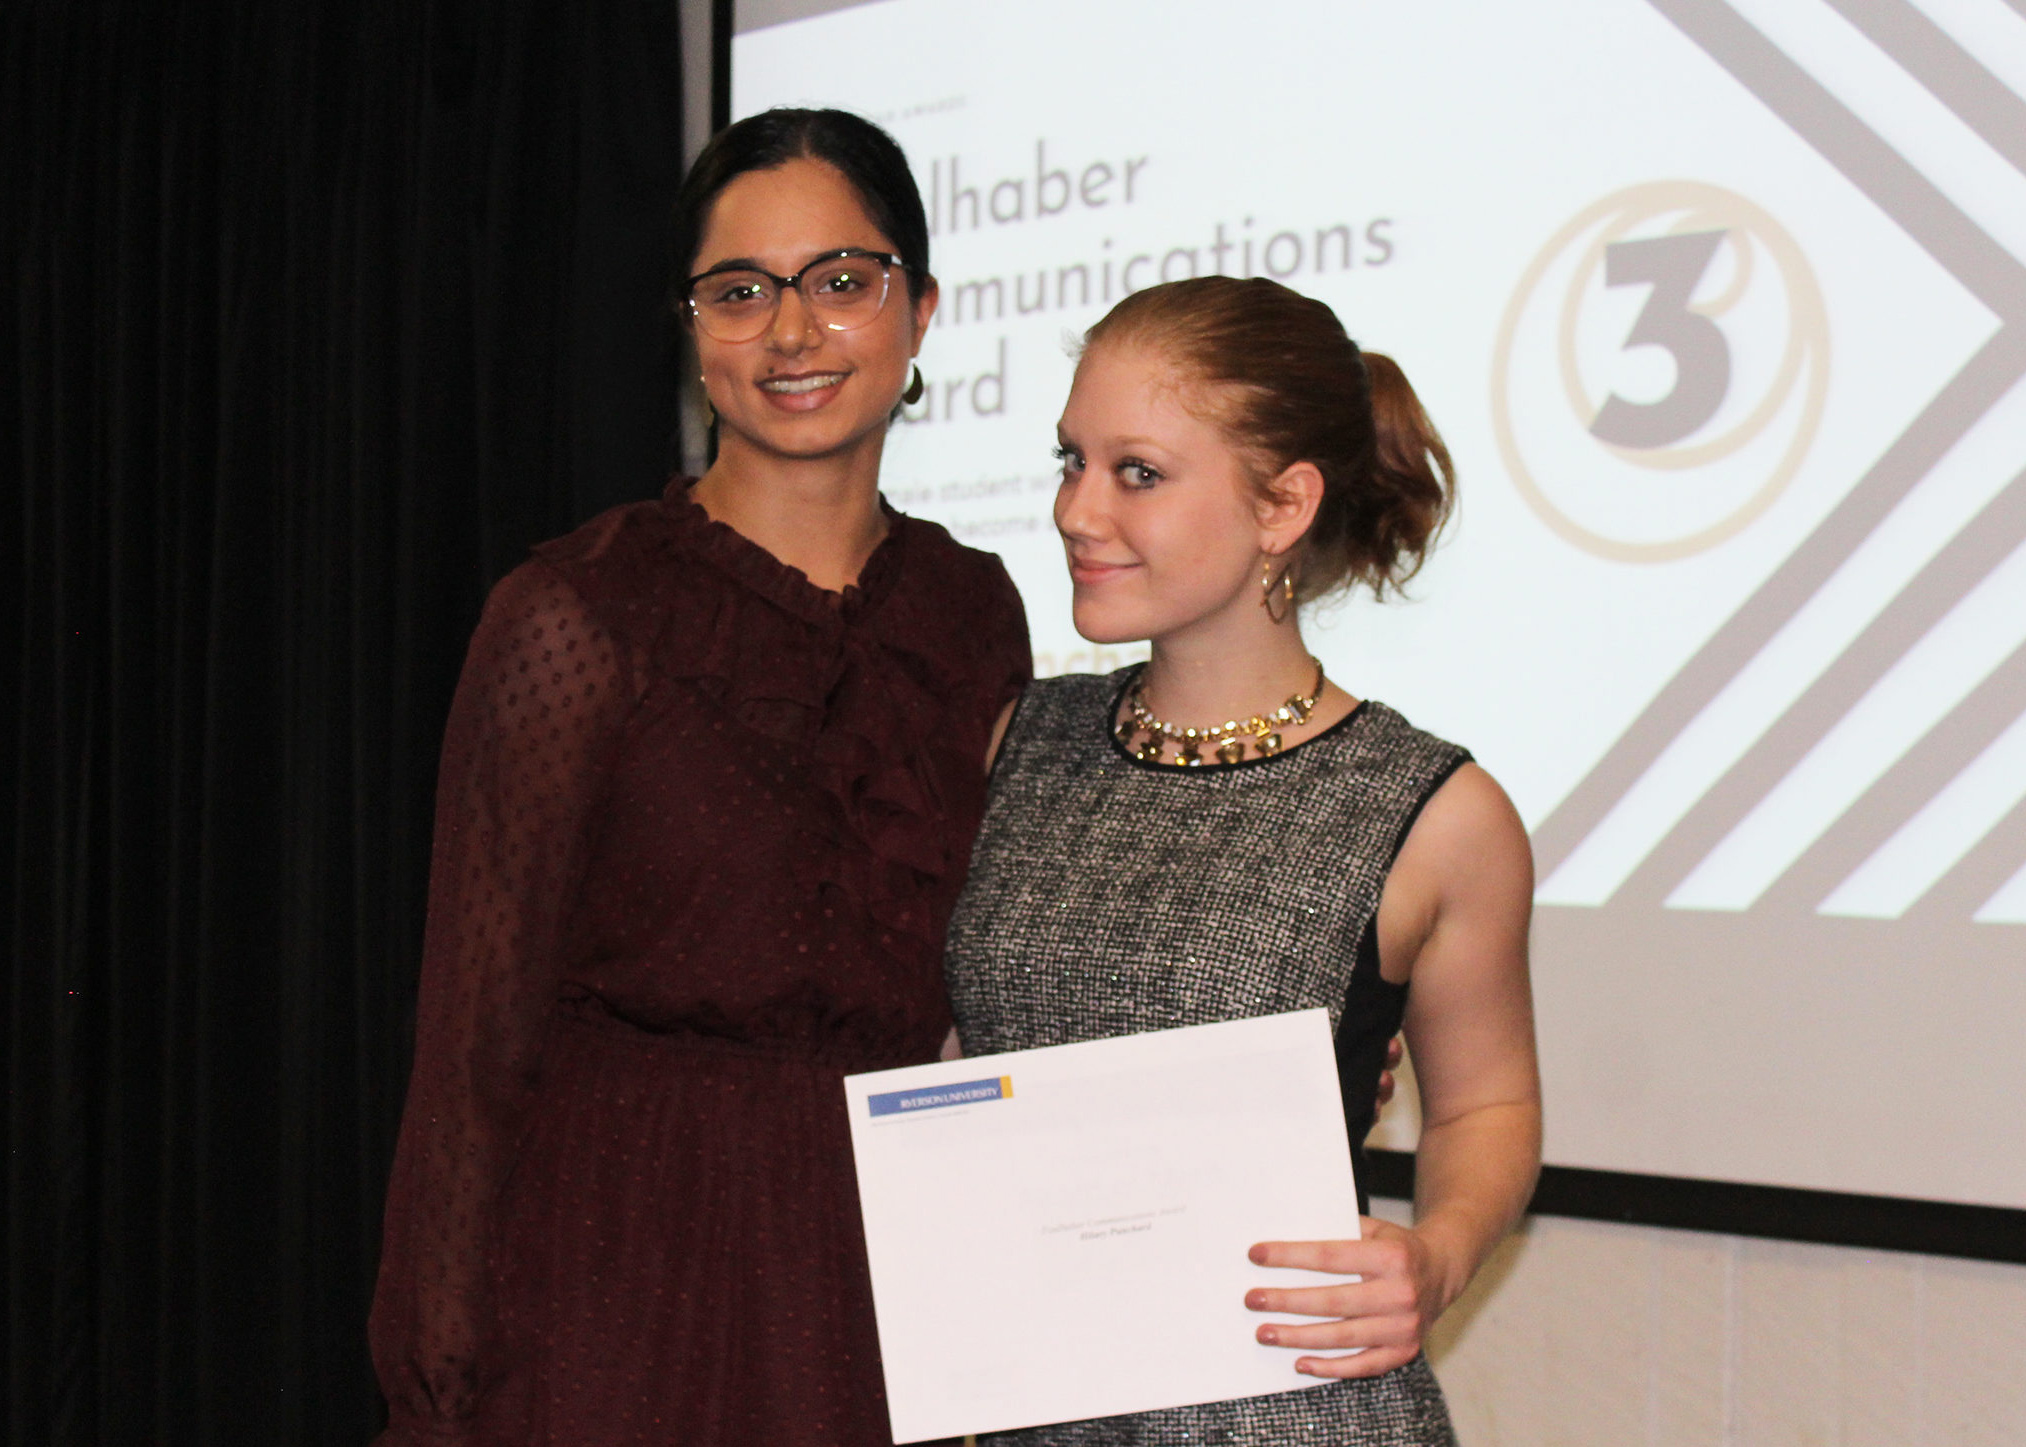 Faulhaber Communications Award presenter Zeba Desantas with award recipient Hilary Punchard.